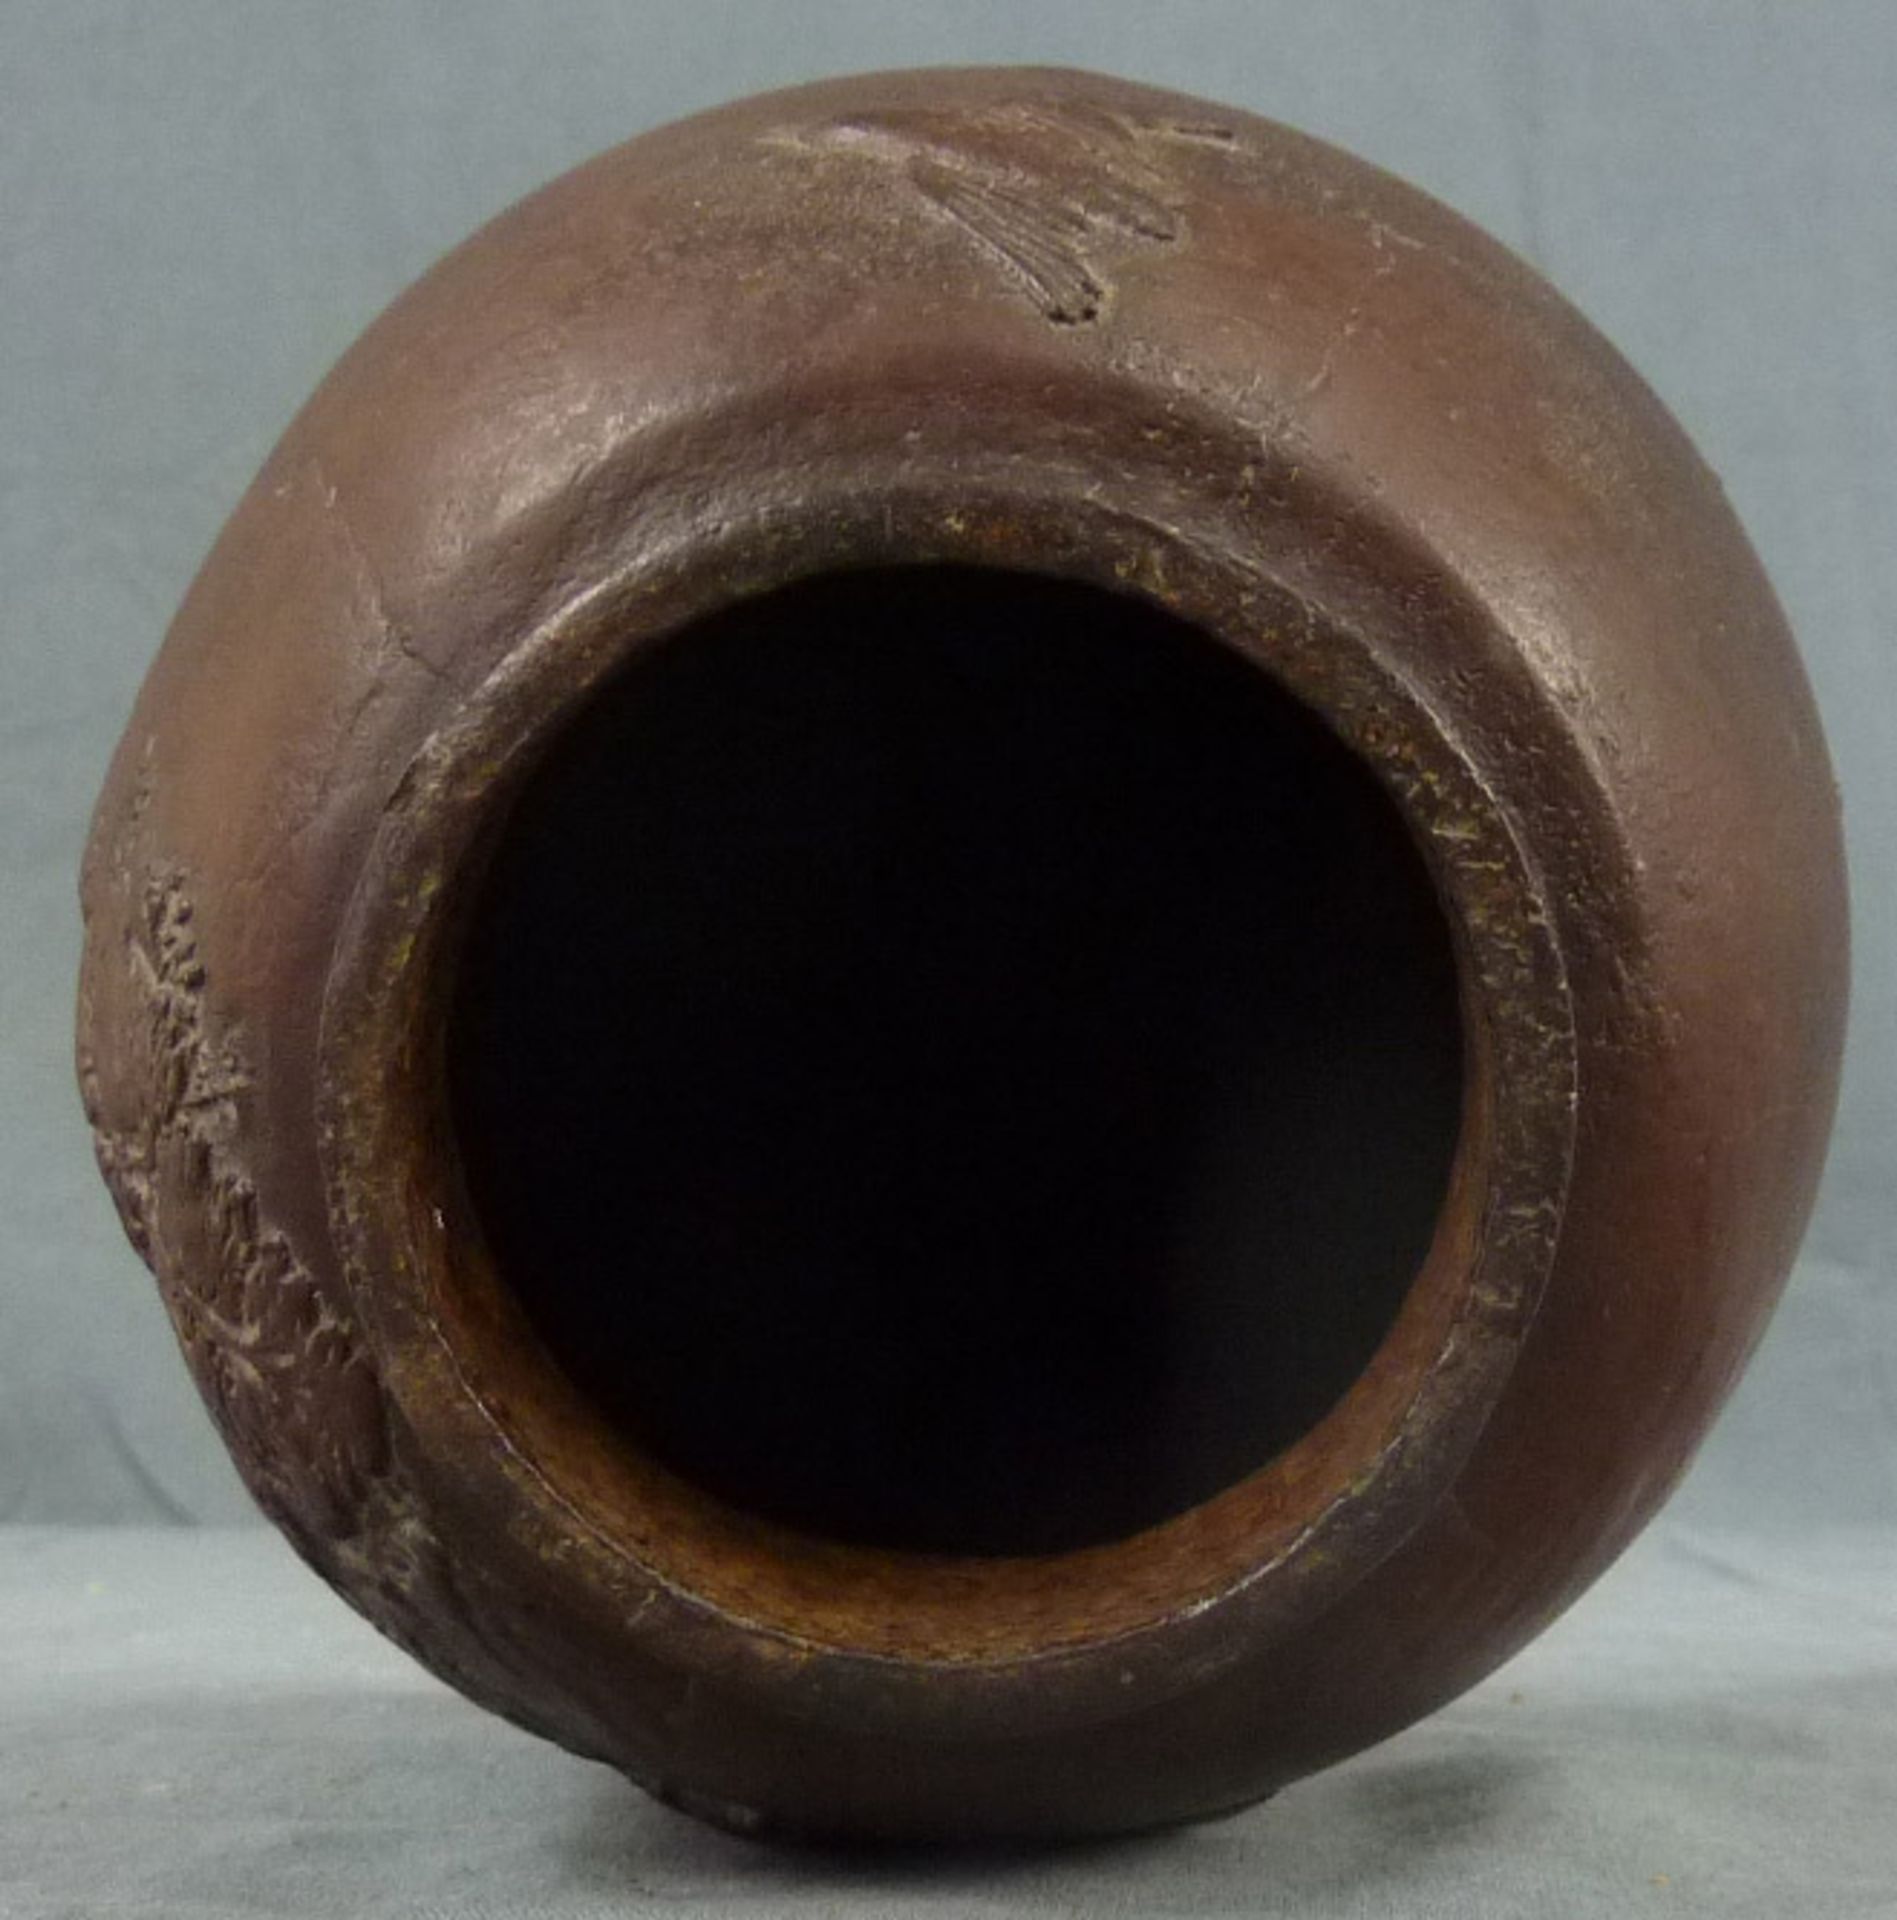 Vase. China / Japan? Bronzed. Inscriptions. Cast iron?17 cm high.Vase. Wohl China / Japan. - Bild 7 aus 8